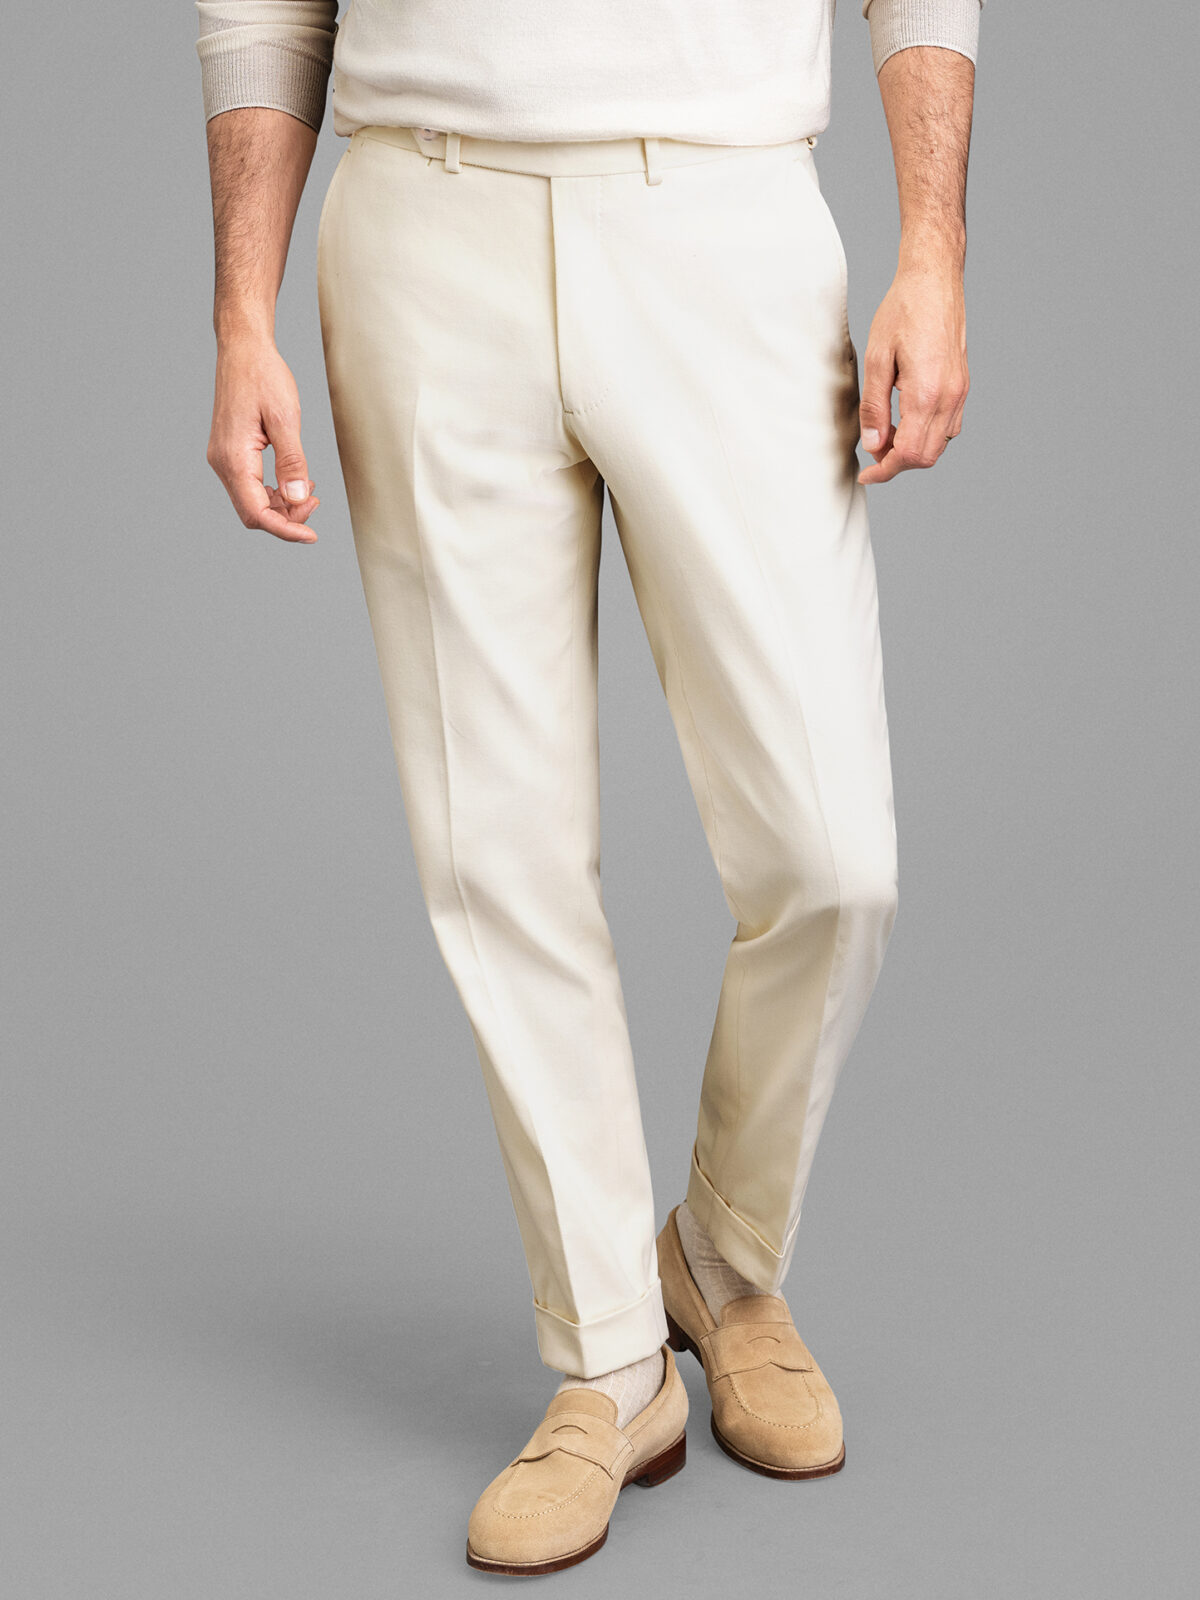 Pleated Pants / Slacks Plus White Shirt & Matching Tie Ivory